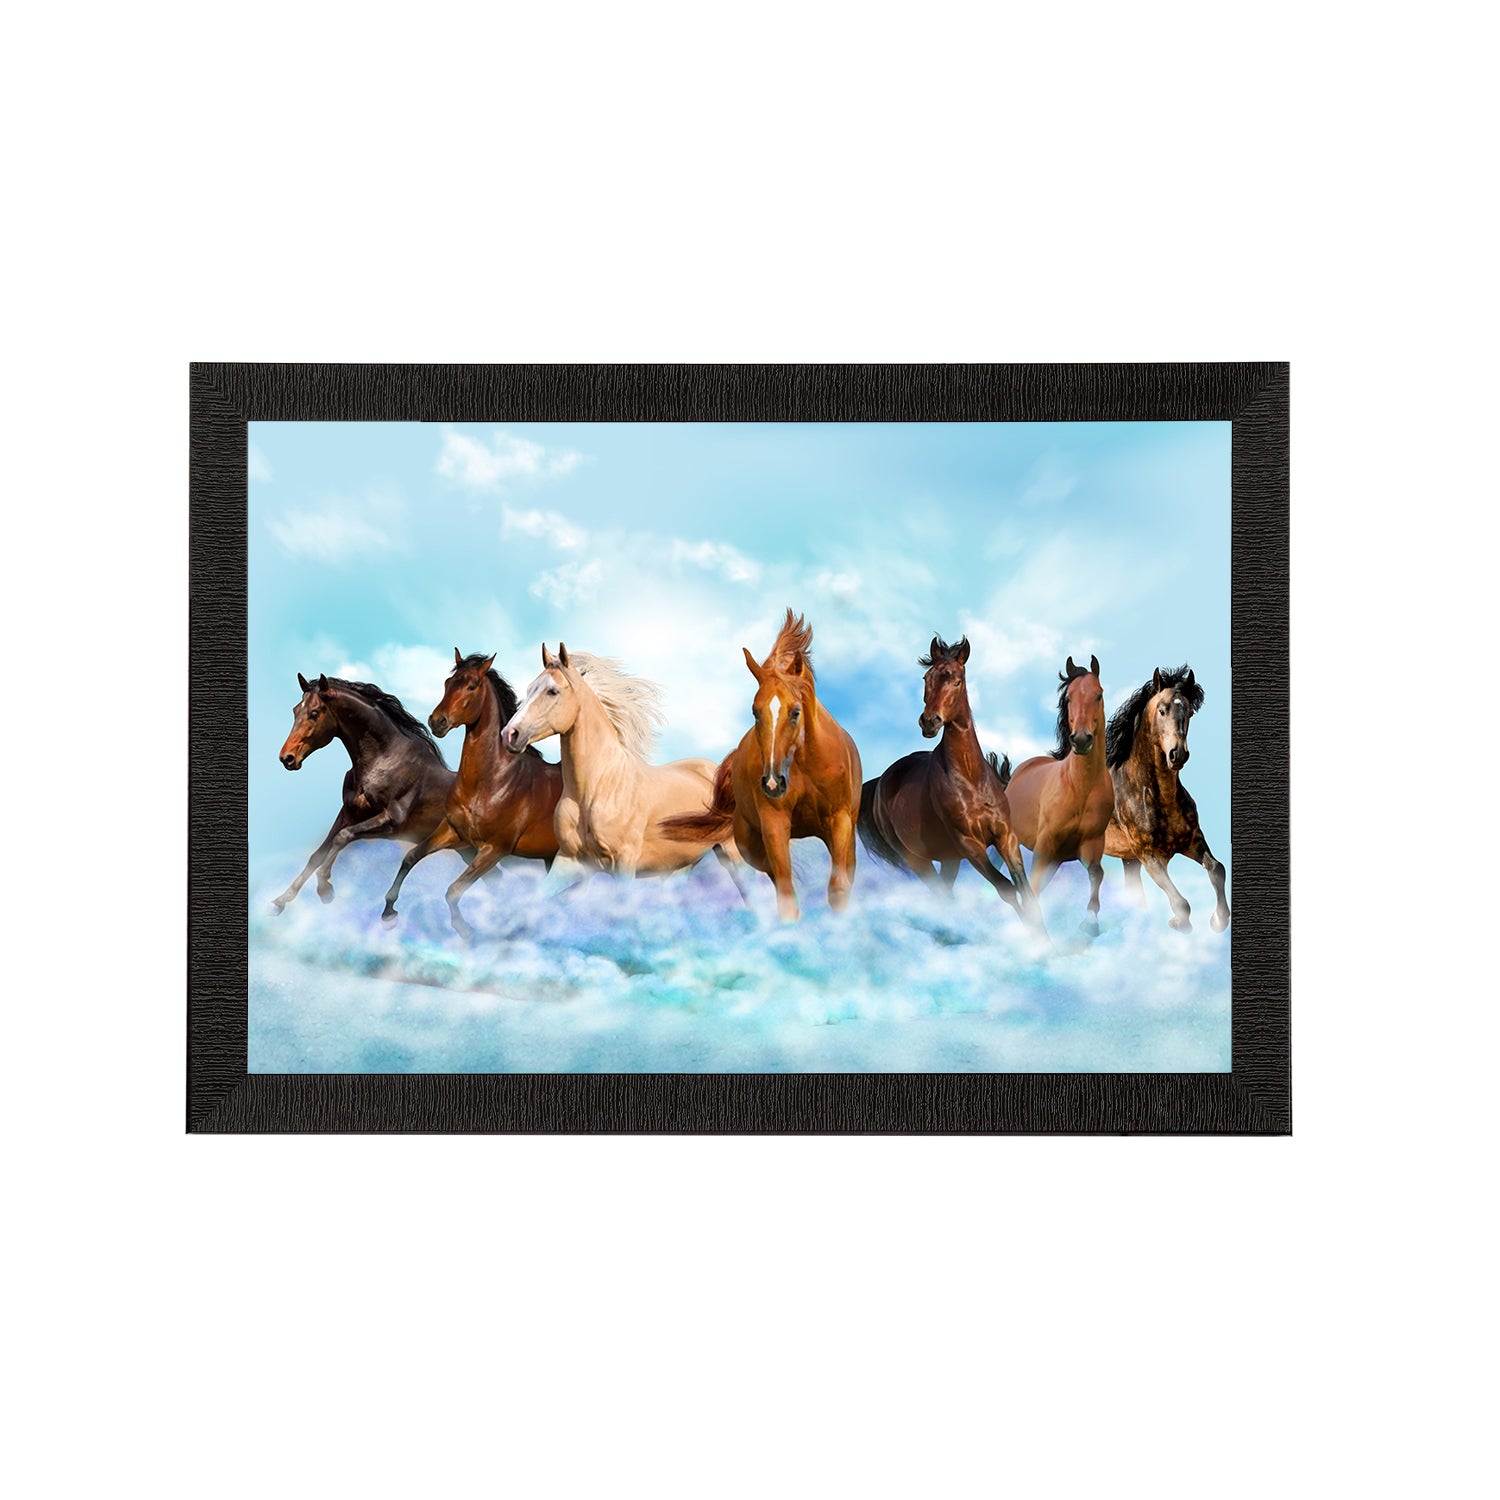 Seven Running Horses Painting Digital Printed Animal Wall Art